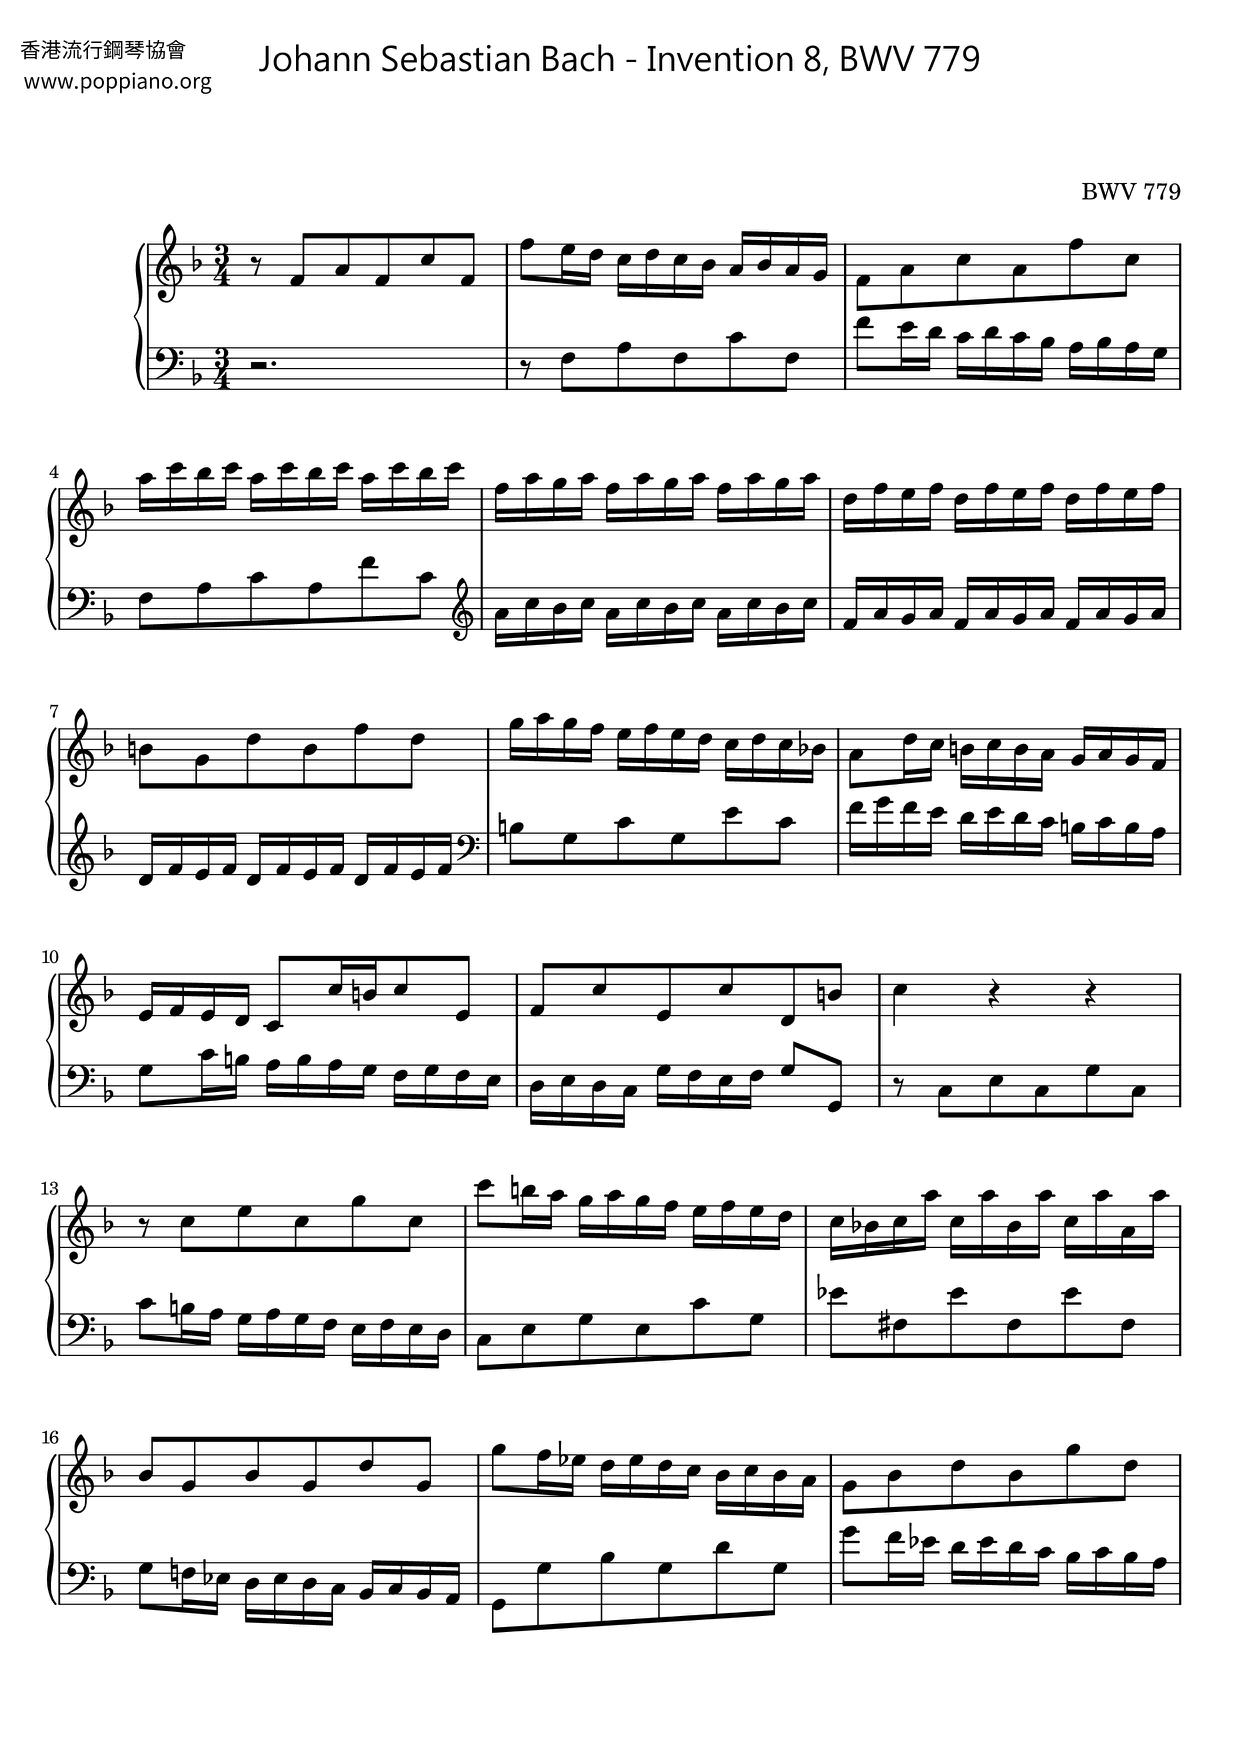 Invention 8, BWV 779 Score